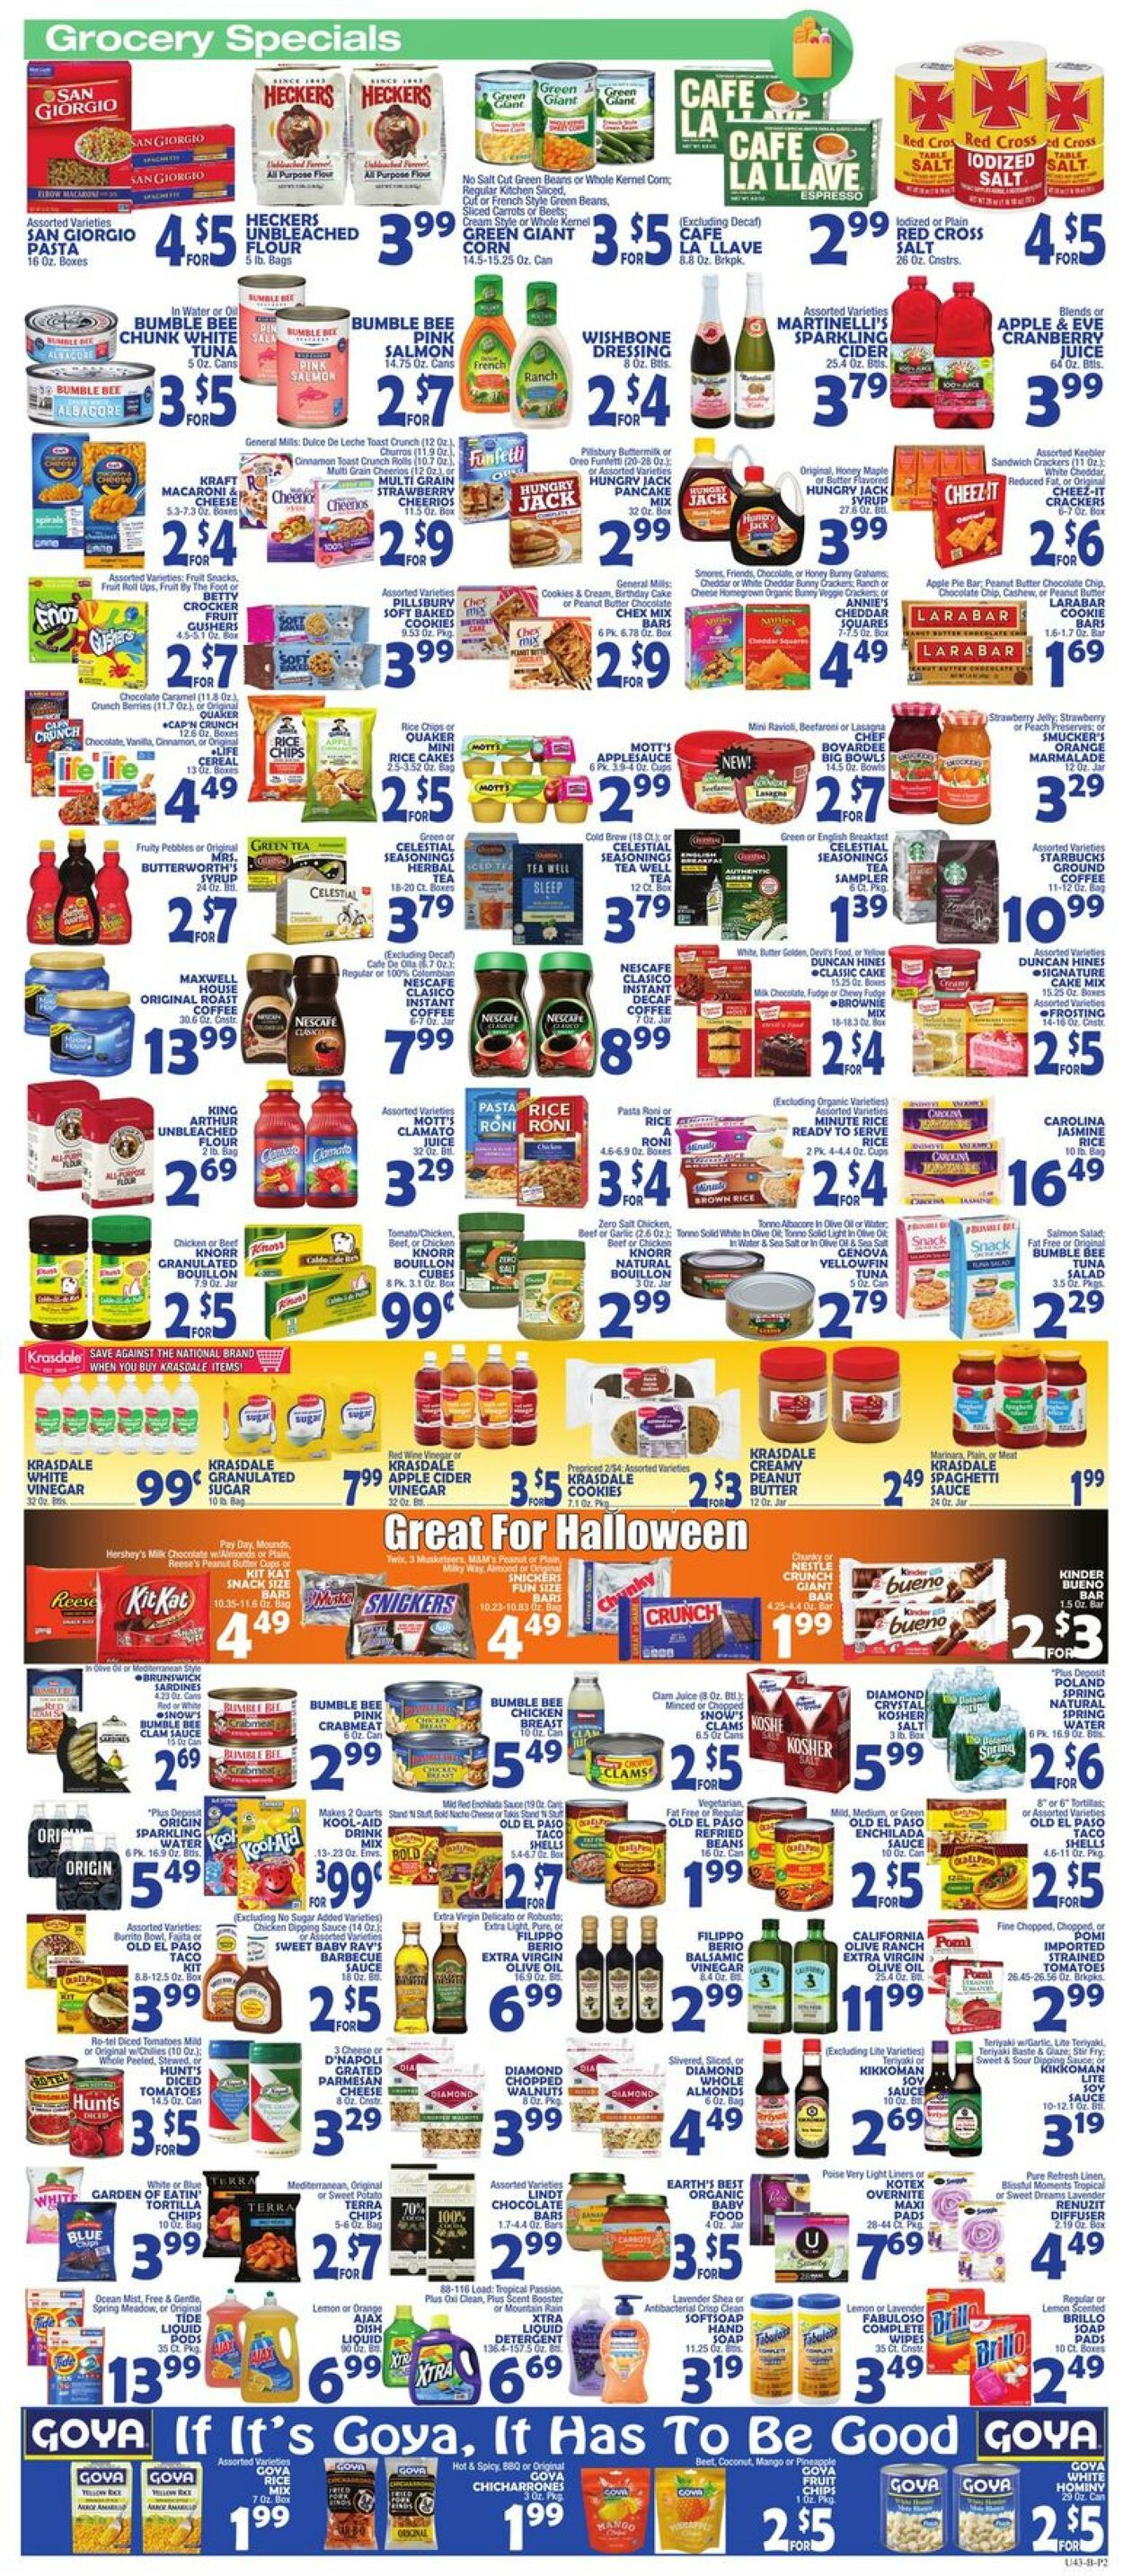 Weekly ad Bravo Supermarkets 10/14/2022 - 10/20/2022